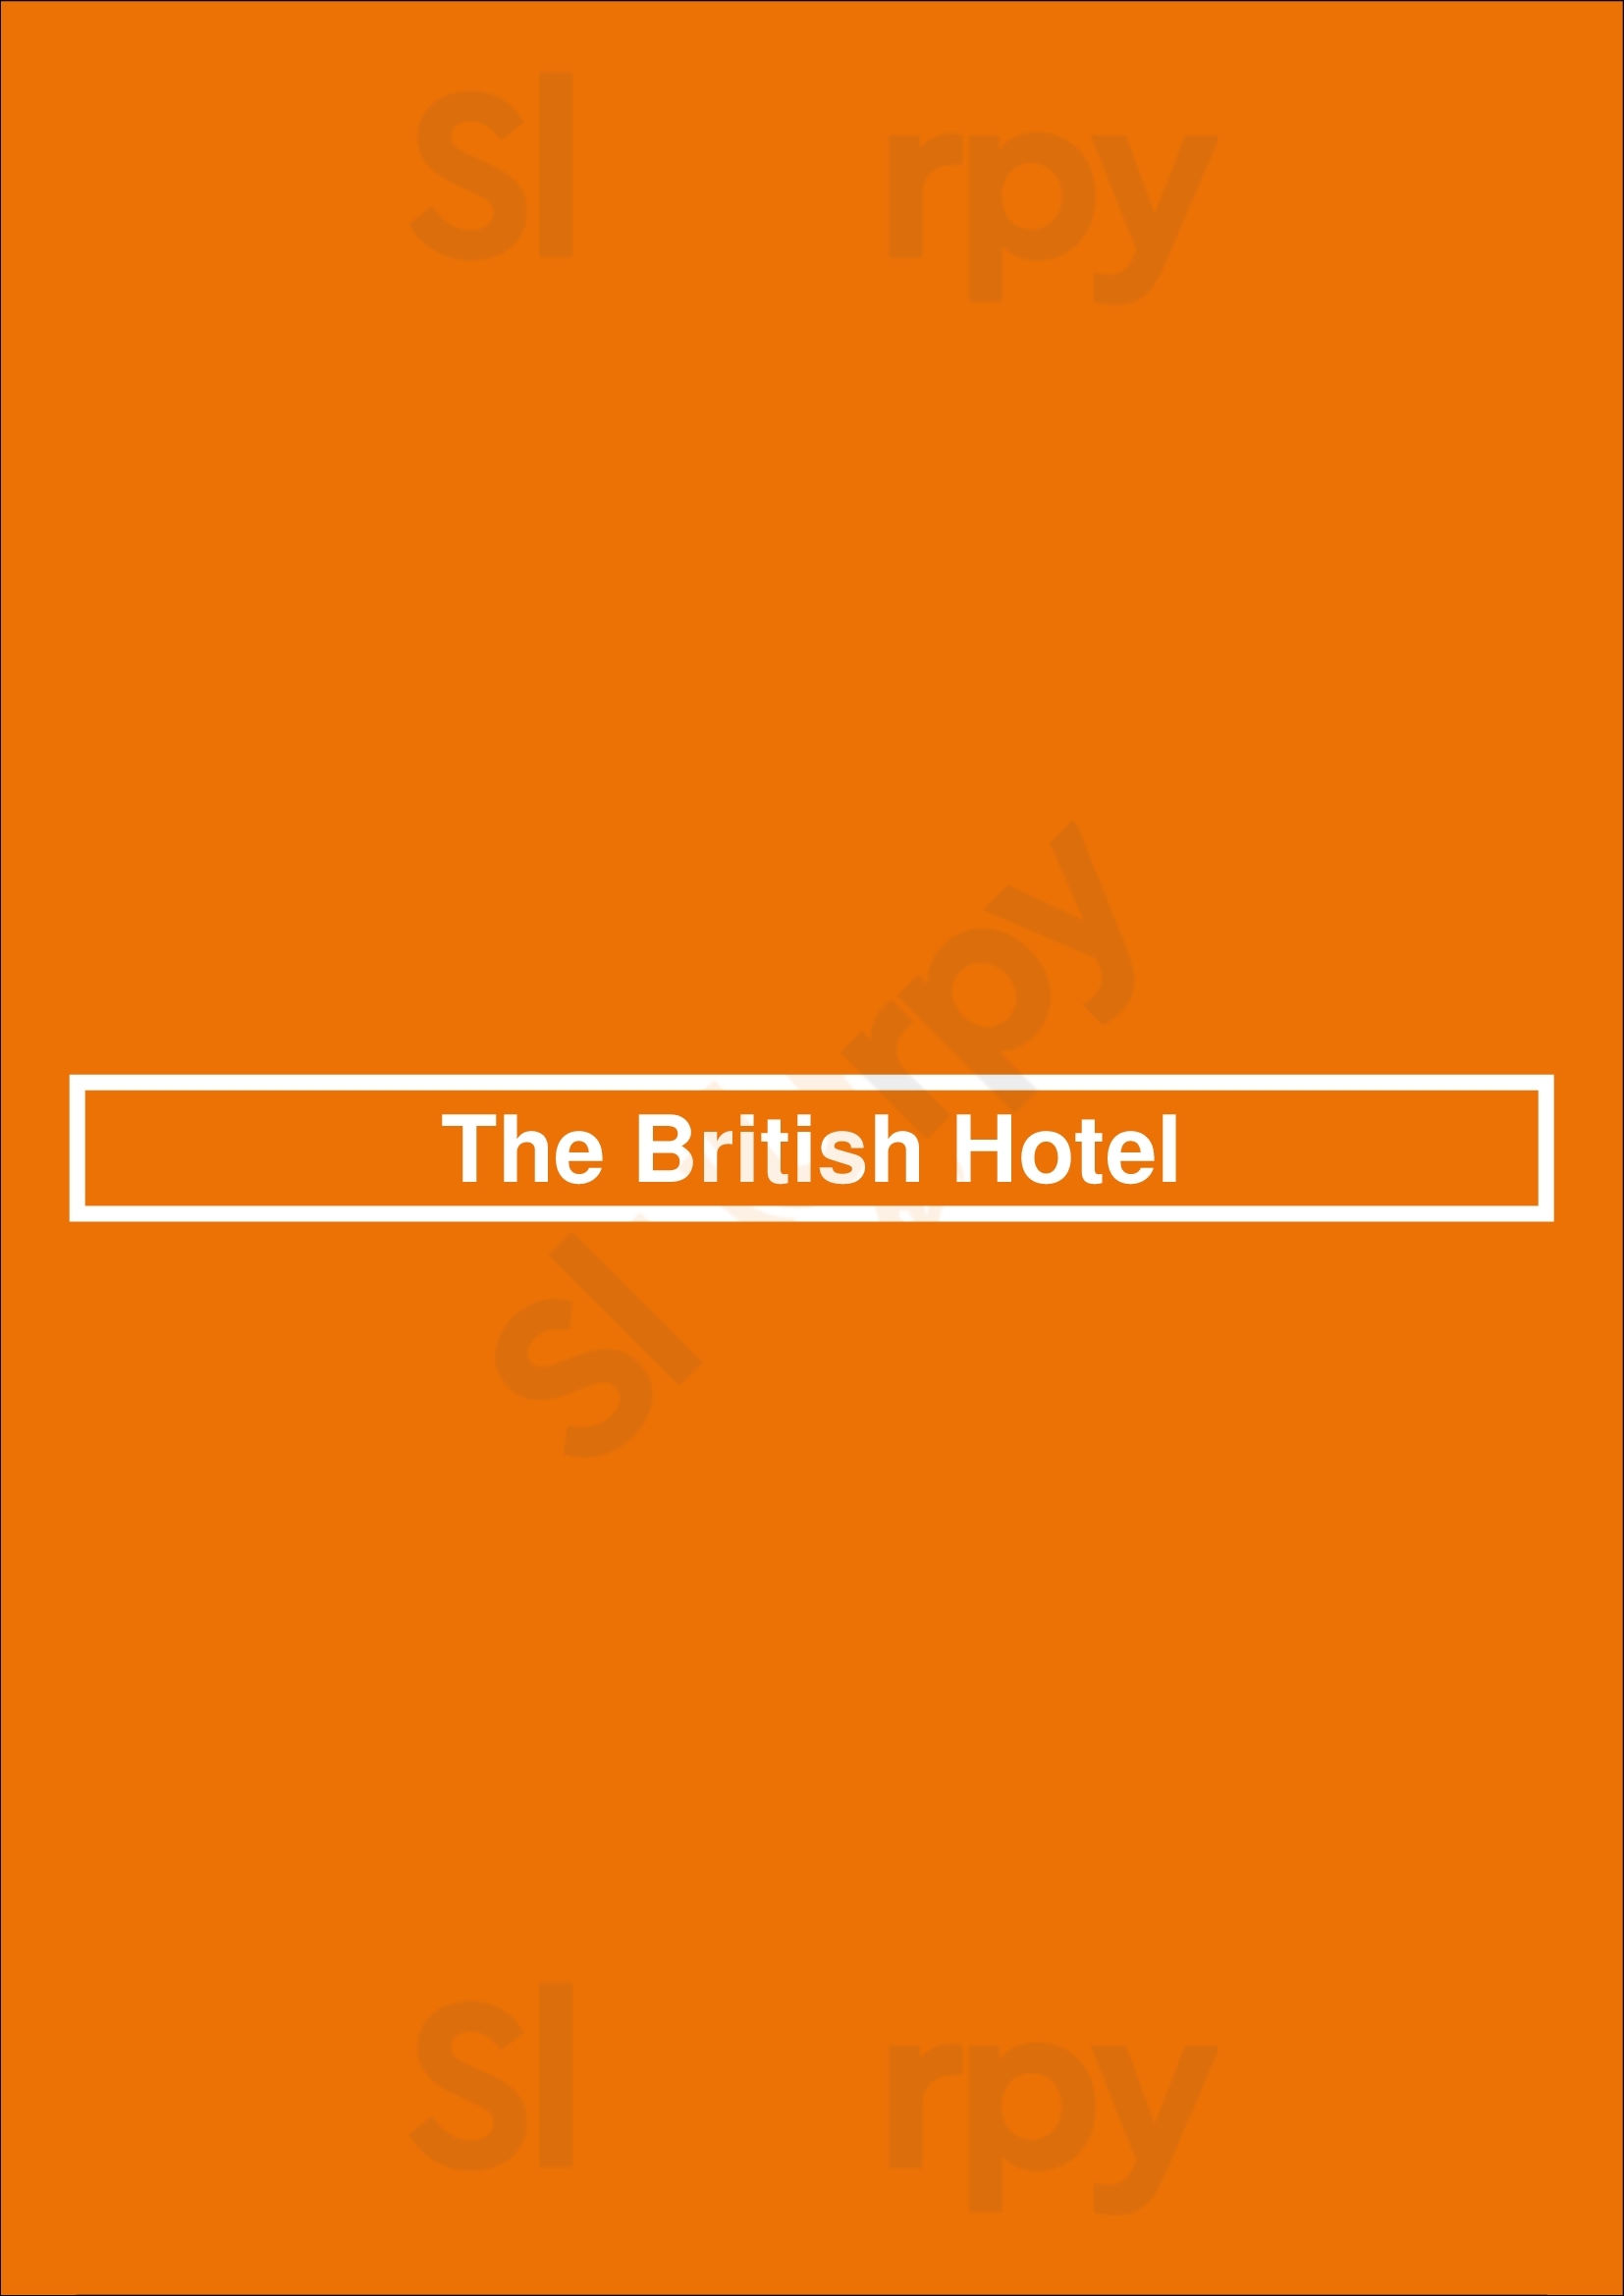 The British Hotel Adelaide Menu - 1